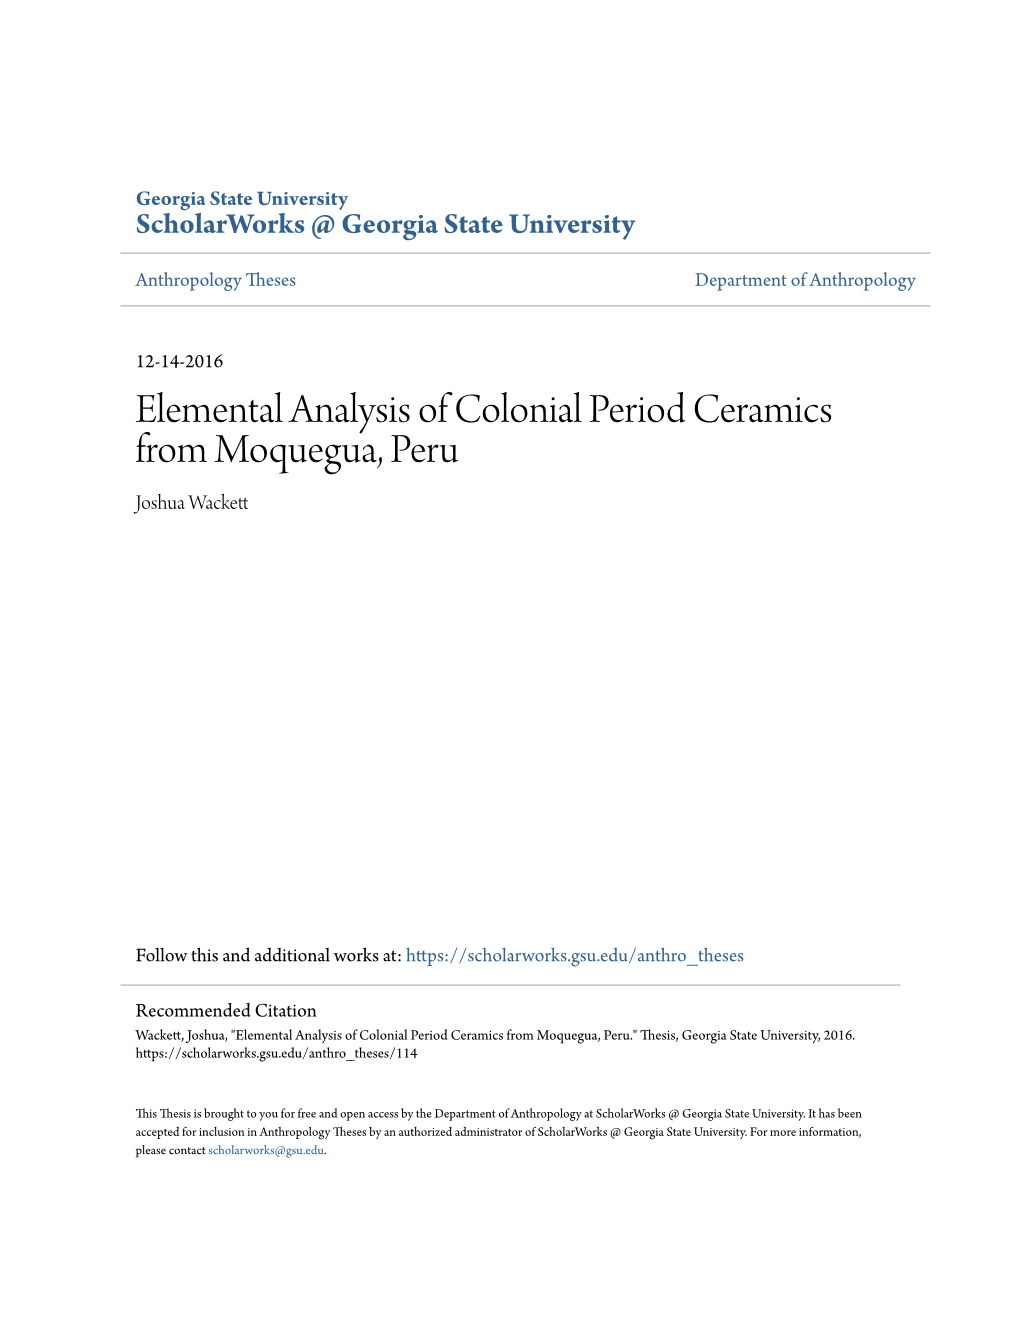 Elemental Analysis of Colonial Period Ceramics from Moquegua, Peru Joshua Wackett